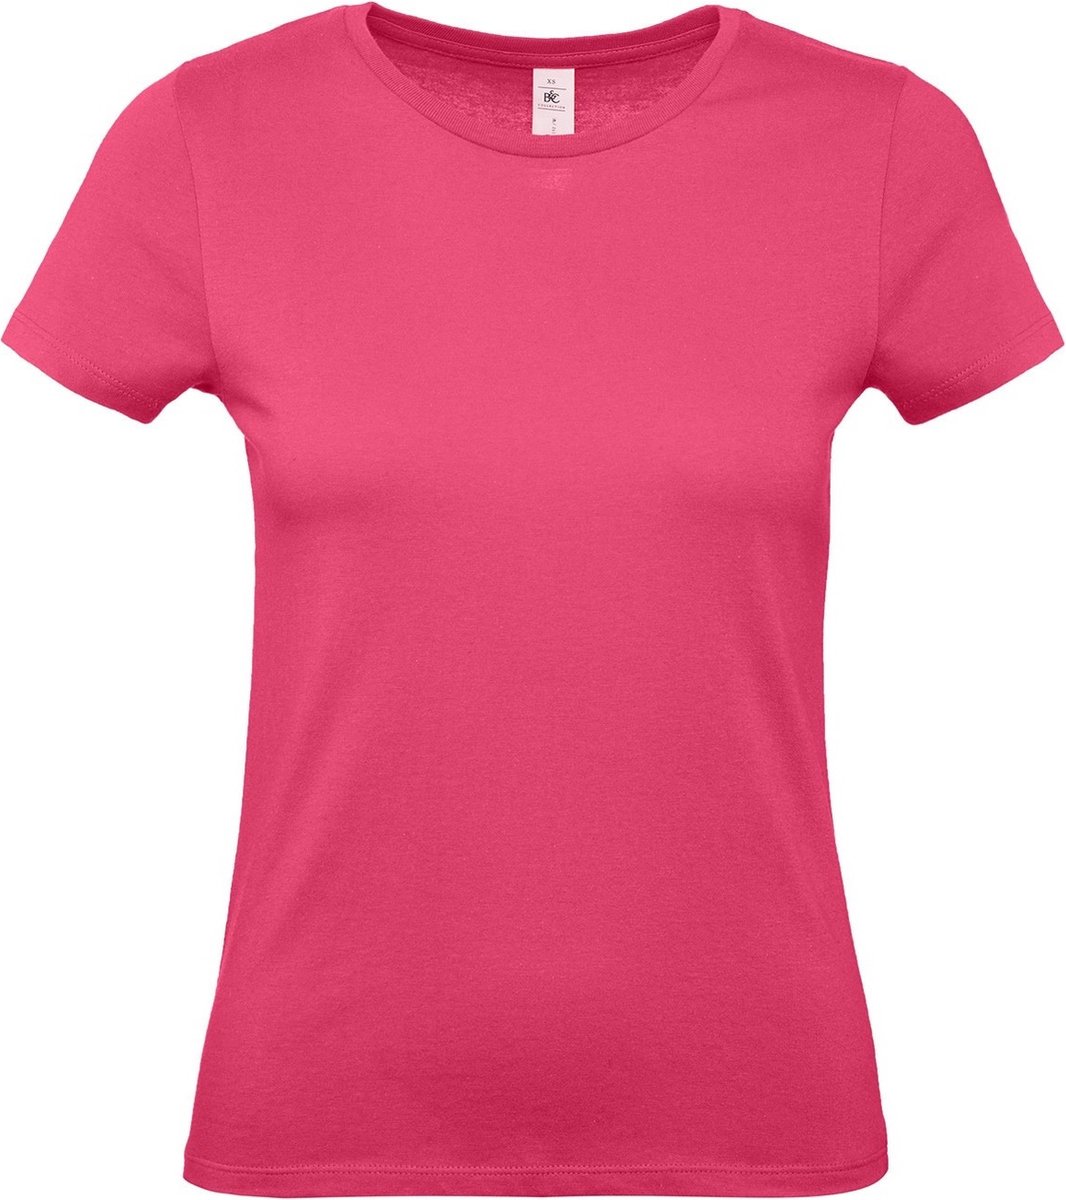 Fuchsia roze basic t-shirts met ronde hals voor dames - katoen - 145 grams - shirts / kleding L (40)